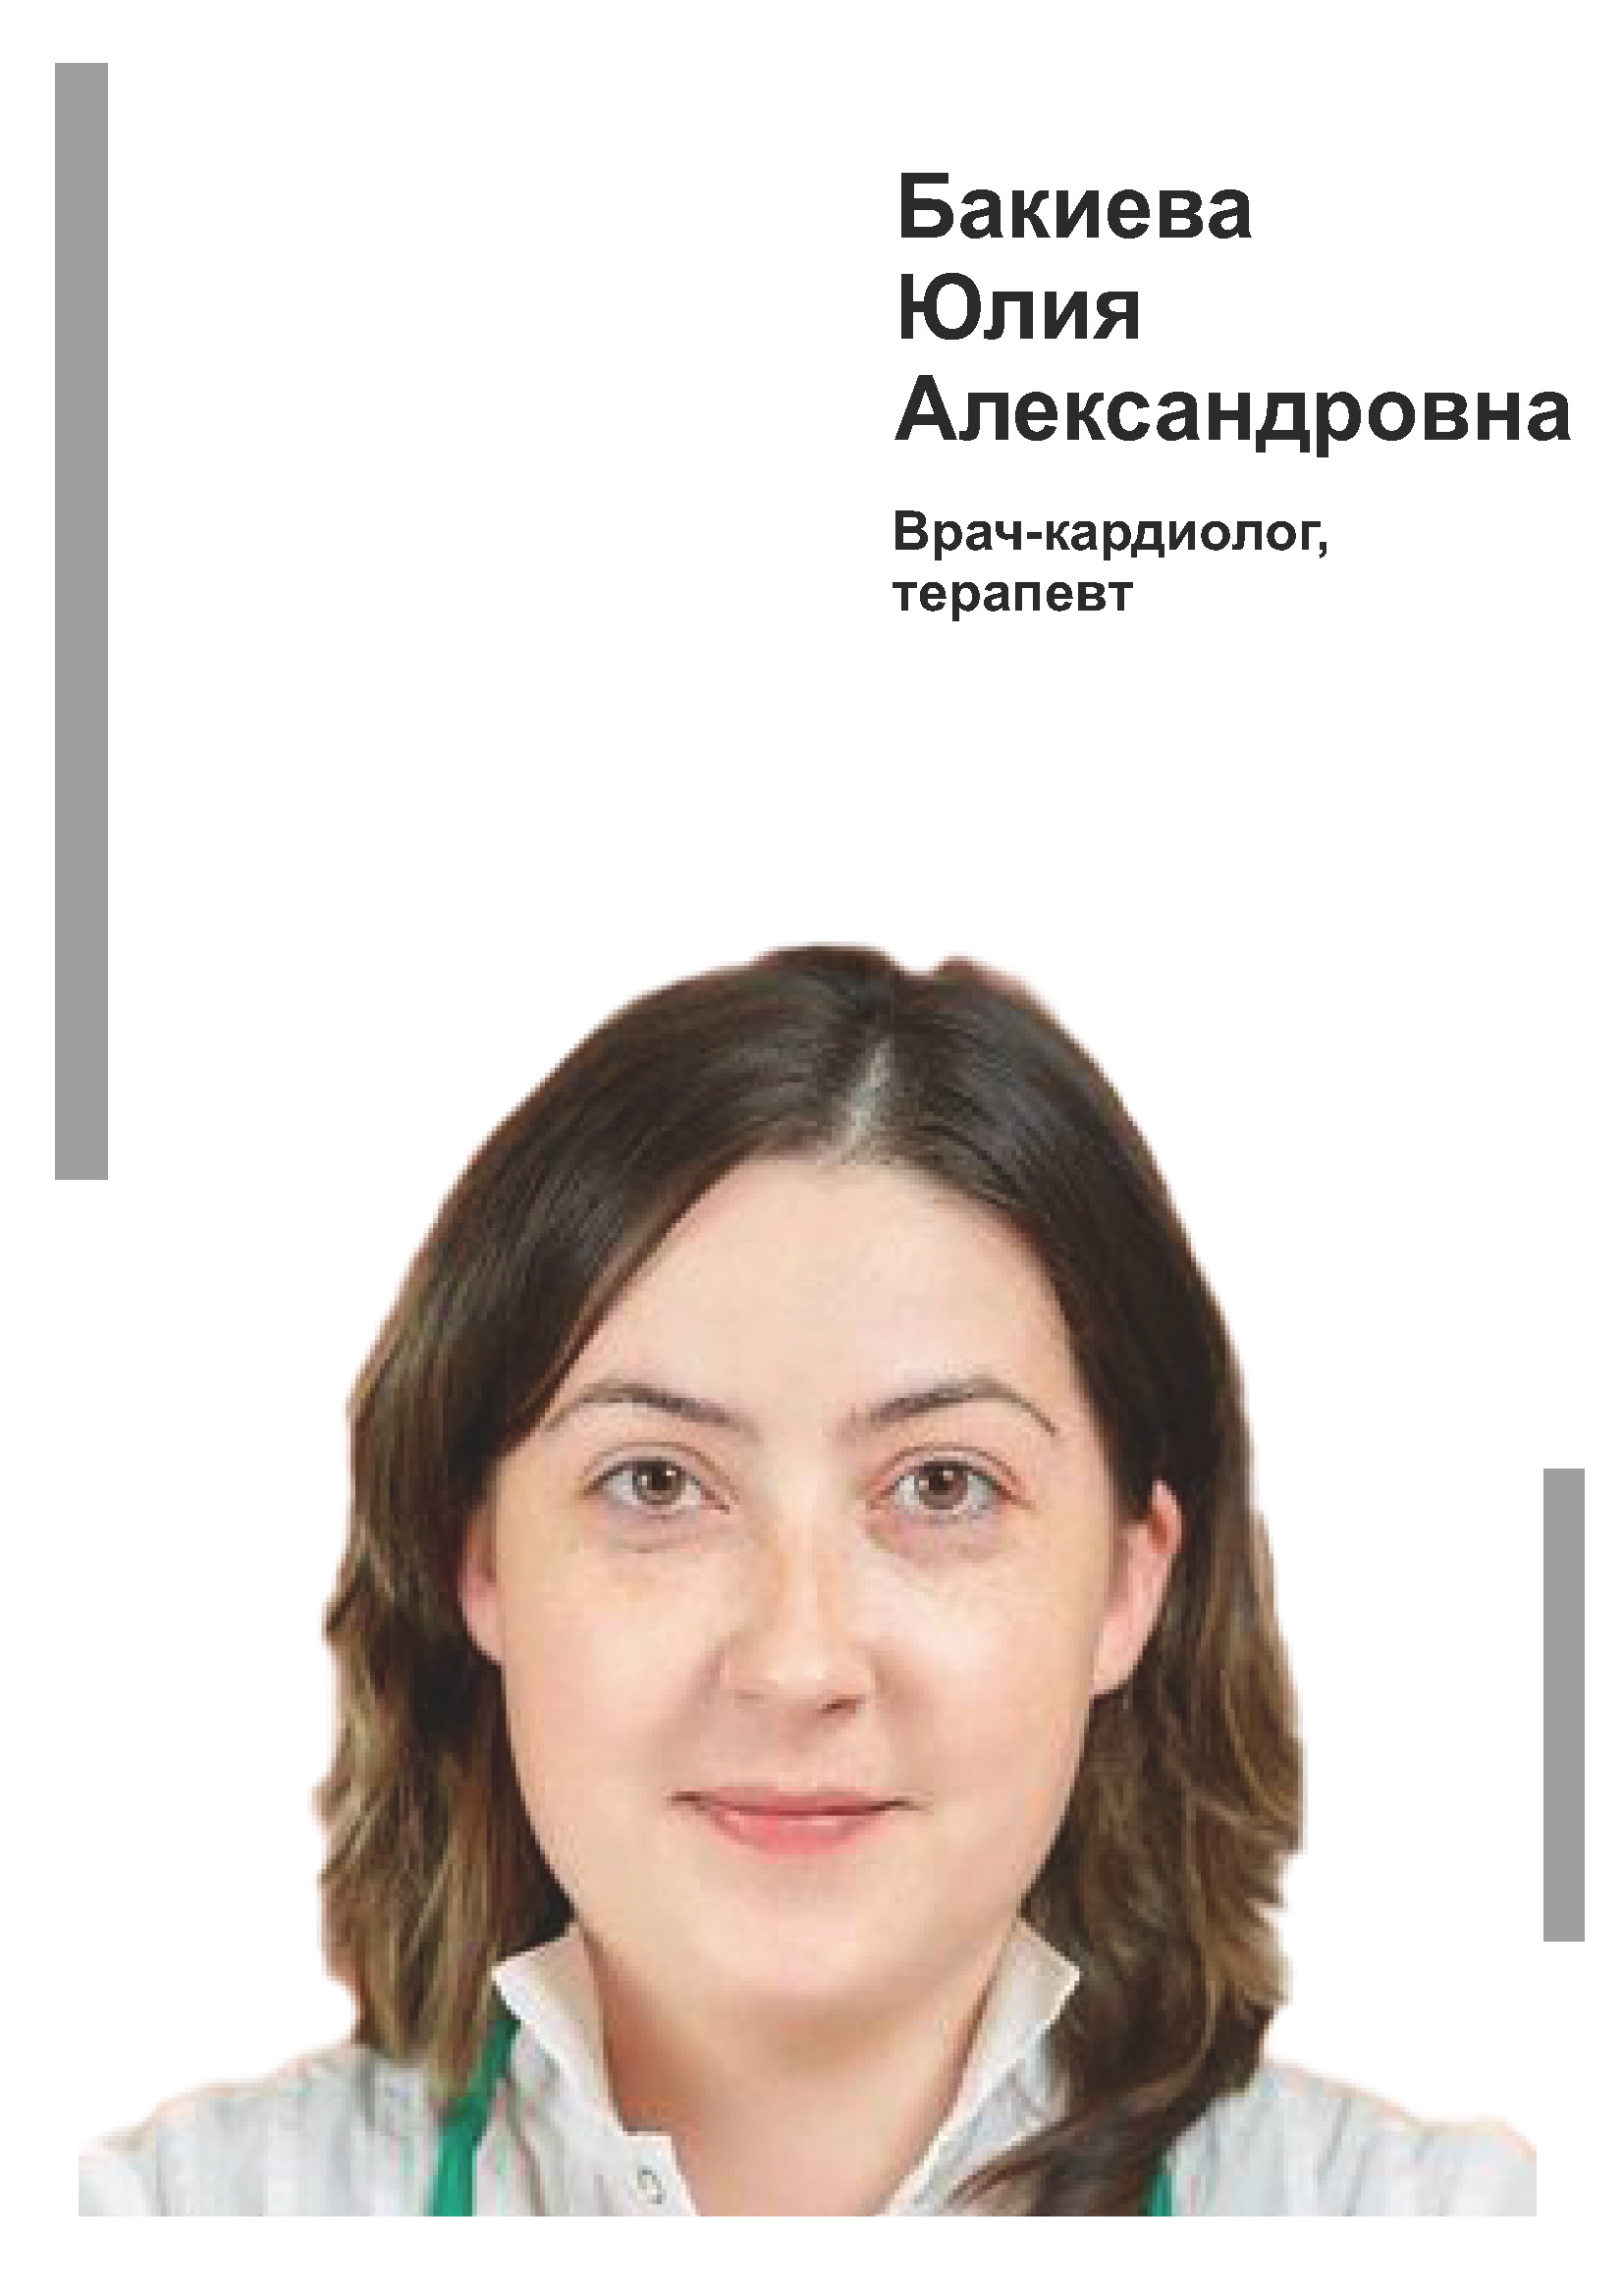 Бакиева Юлия Александрова - кардиолог, терапевт в клинике Lezaffe г. Югорск